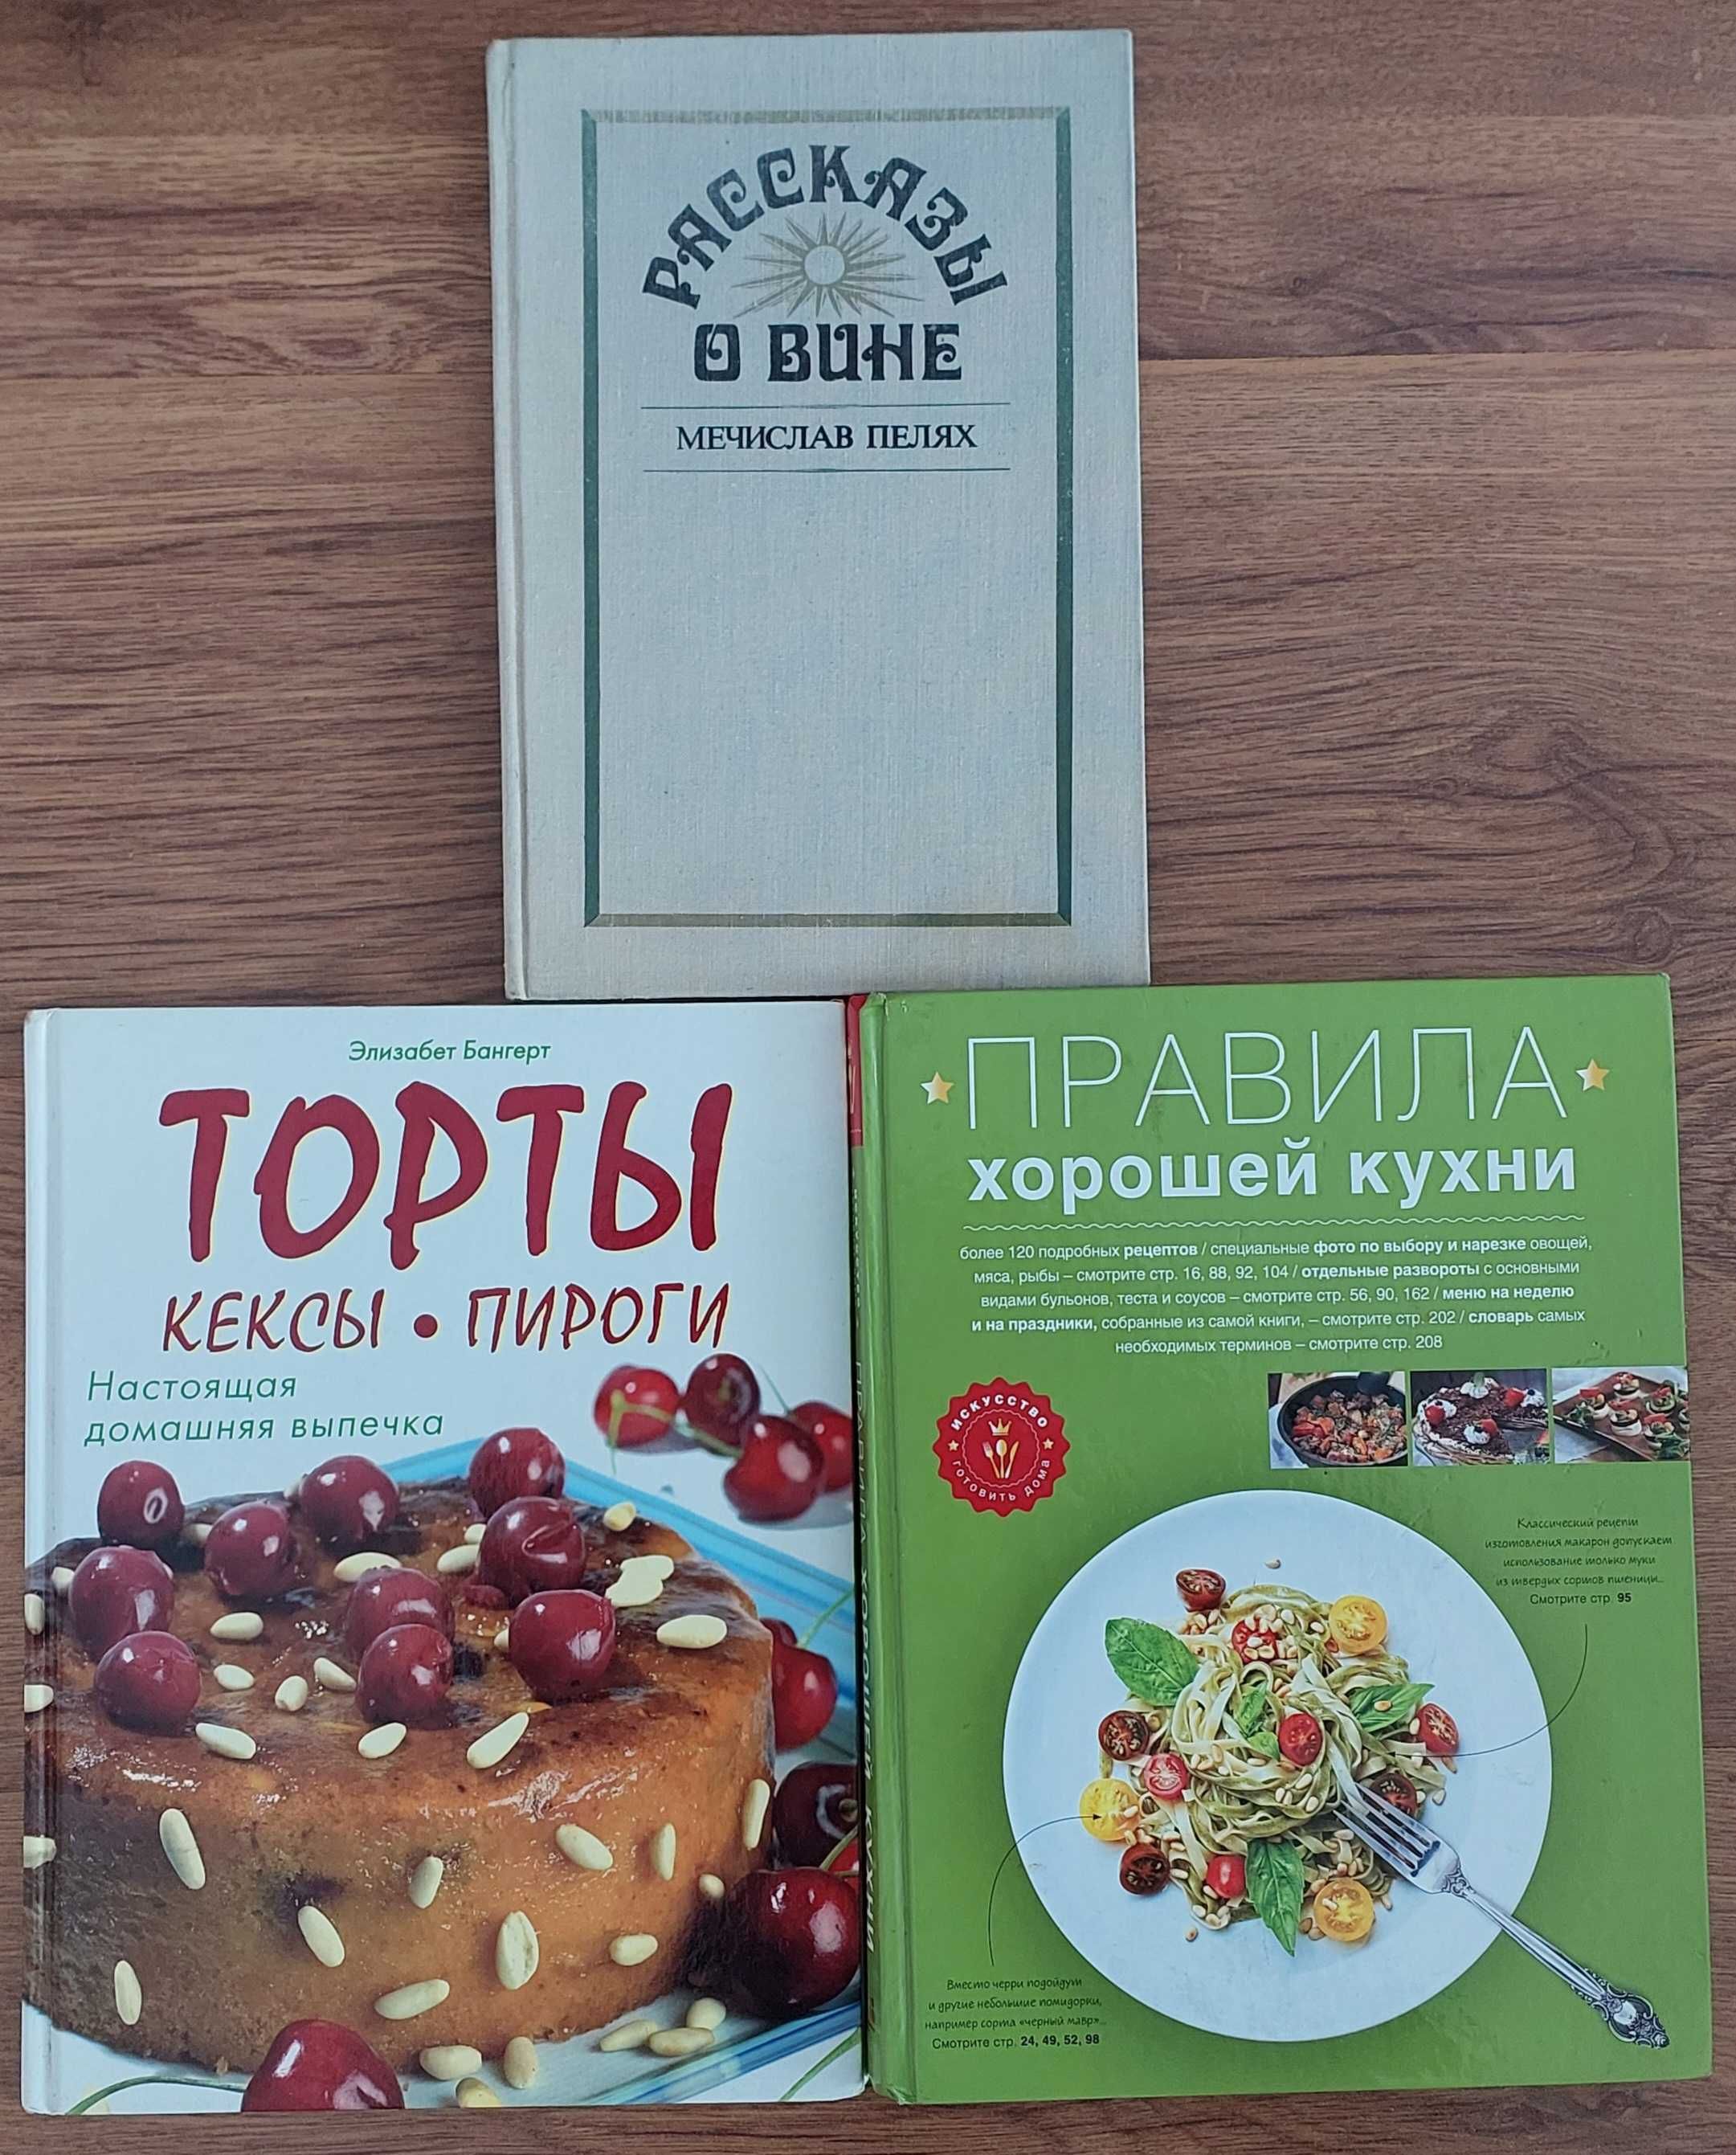 Книги о гостеприимстве,кулинарии,диета,рецепты,похудению и др